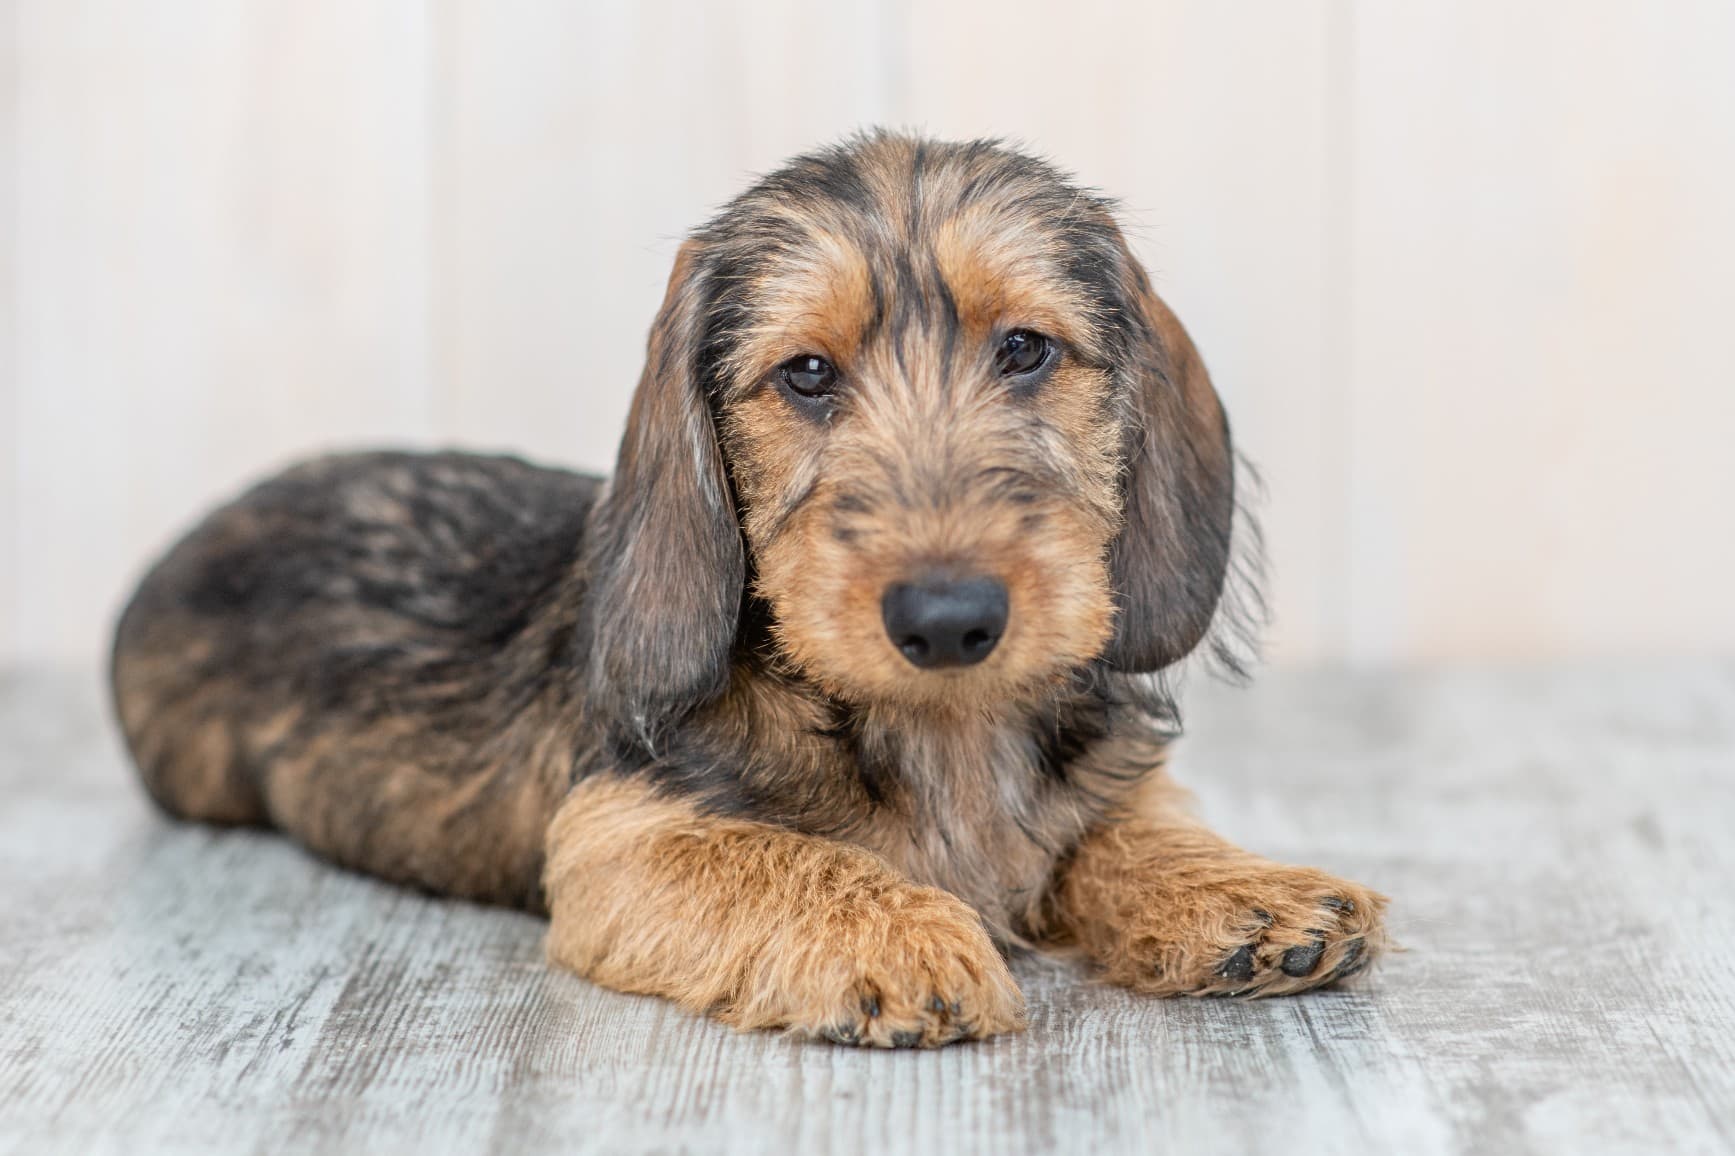 Brown-wire-haired-dachshund-puppy-lying-on-the-floor_Ermolaev-Alexander_Shutterstock